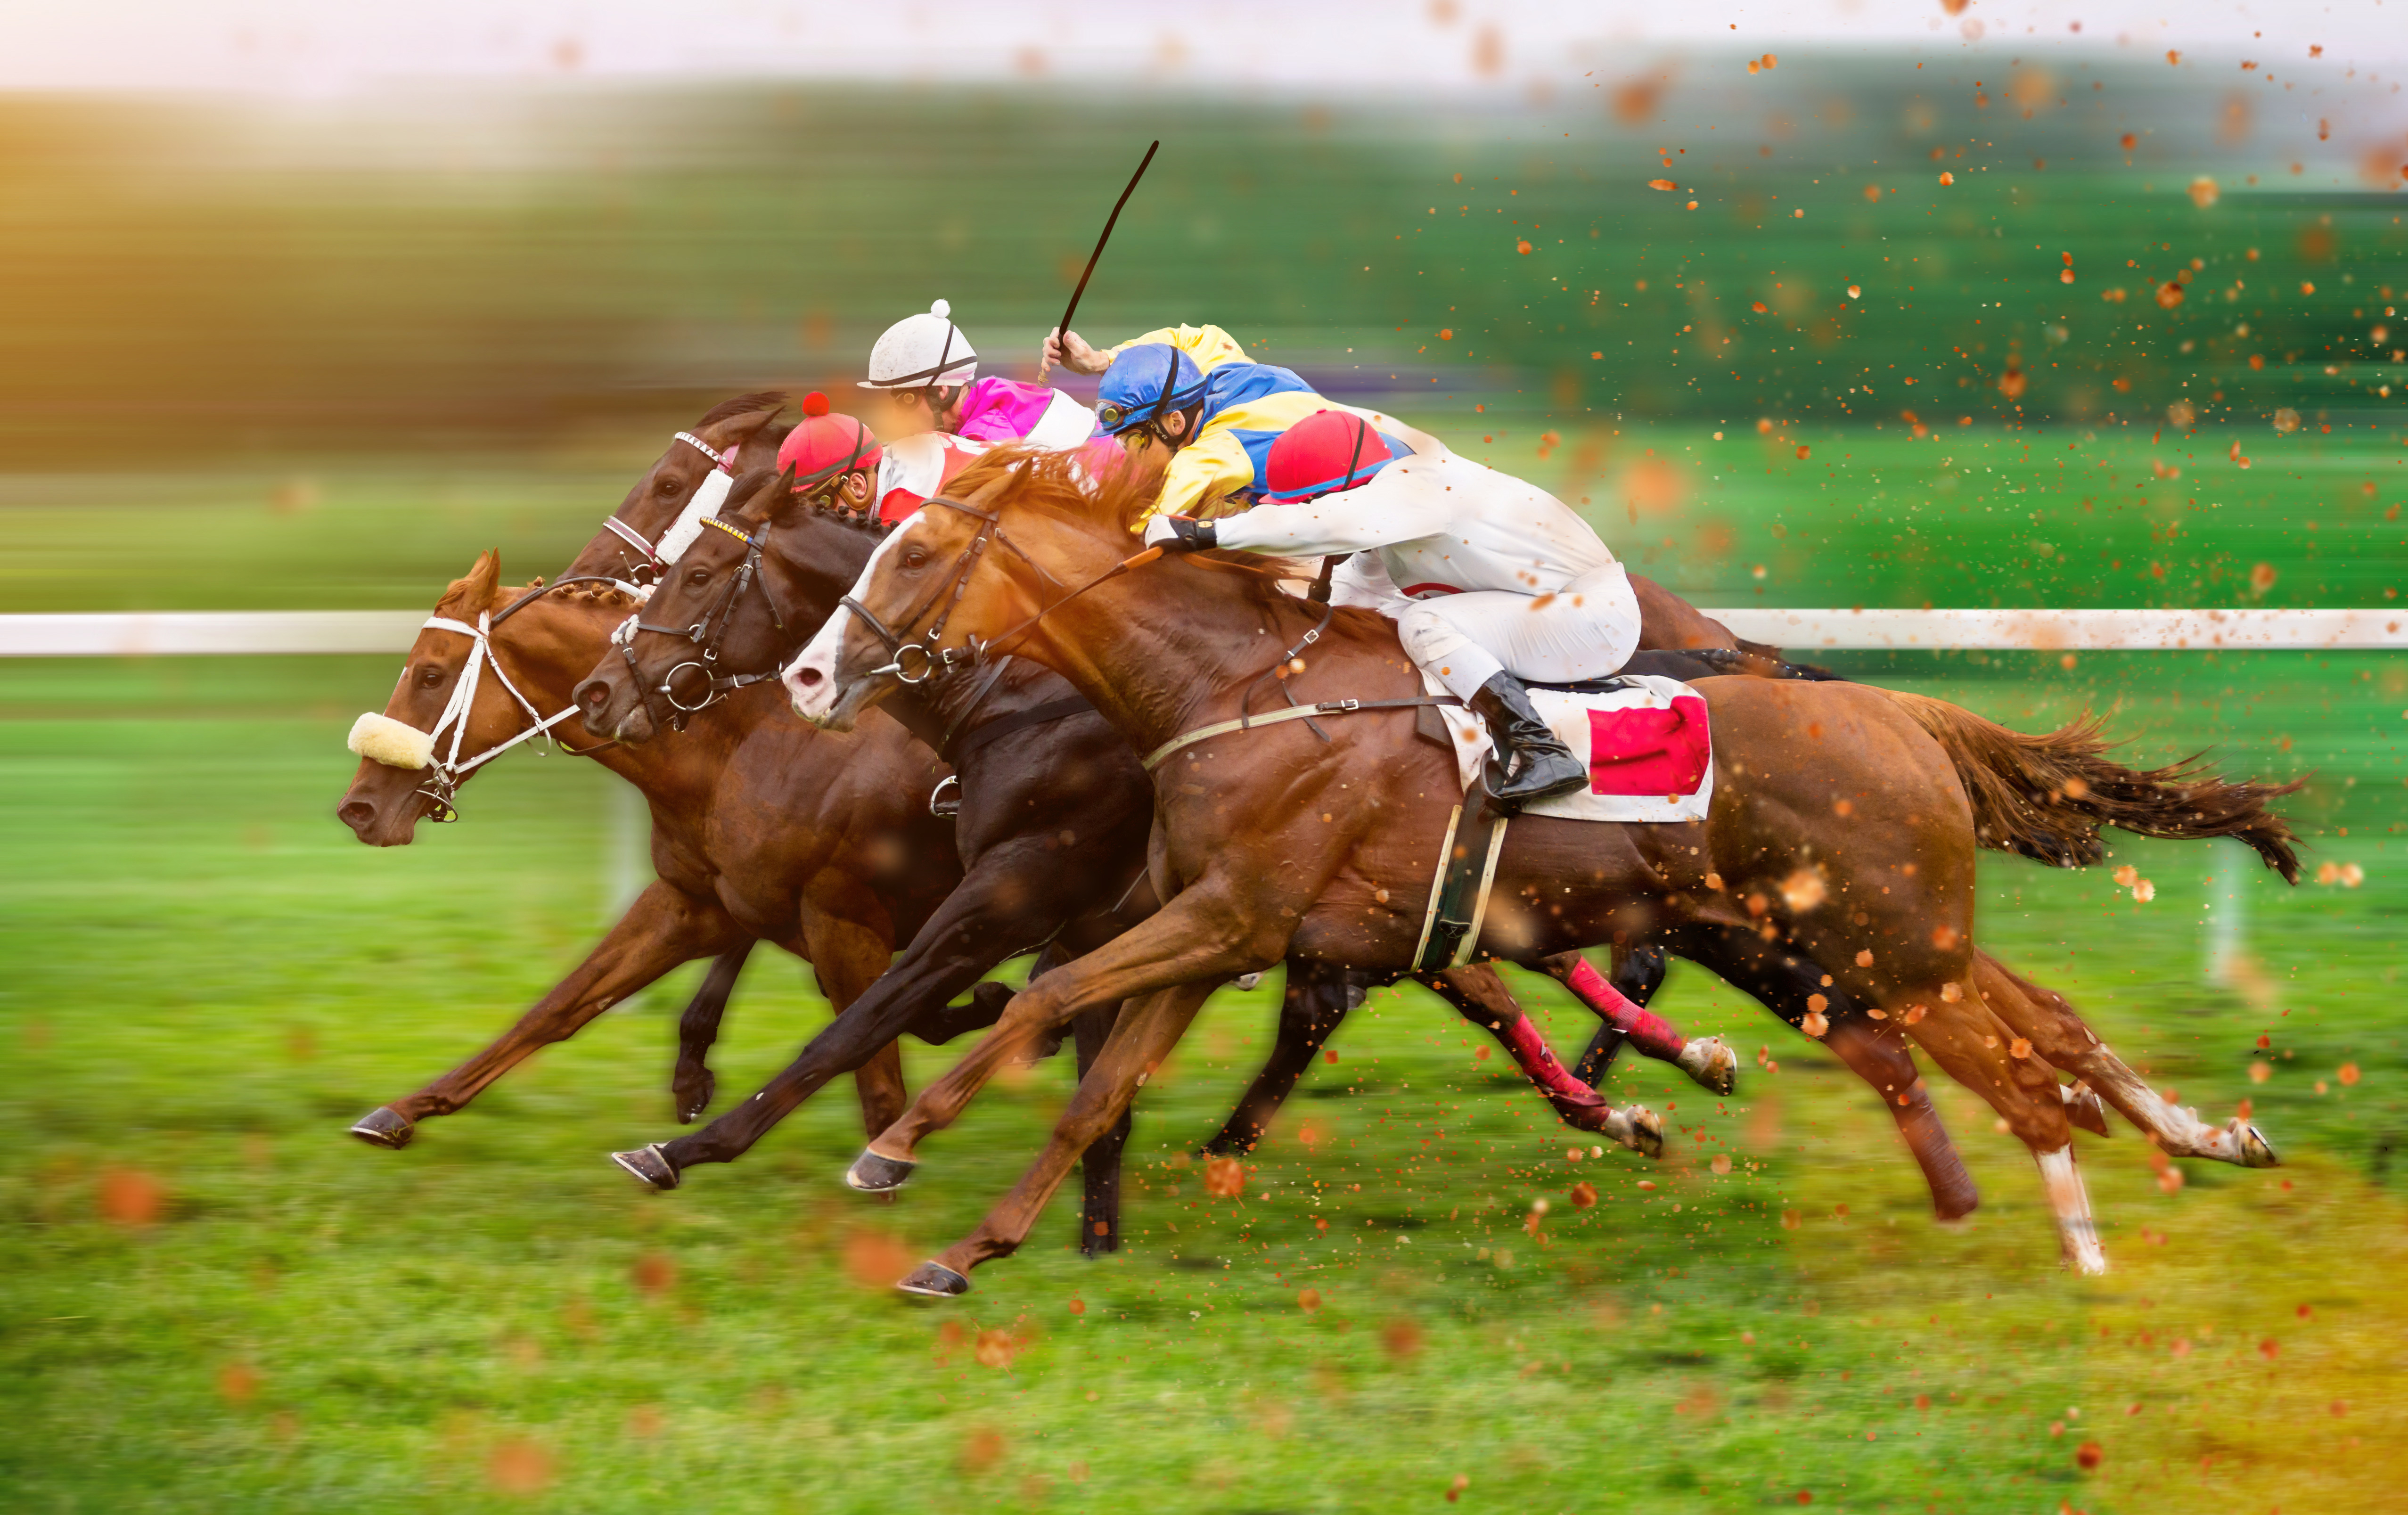 Photograph of a horse race